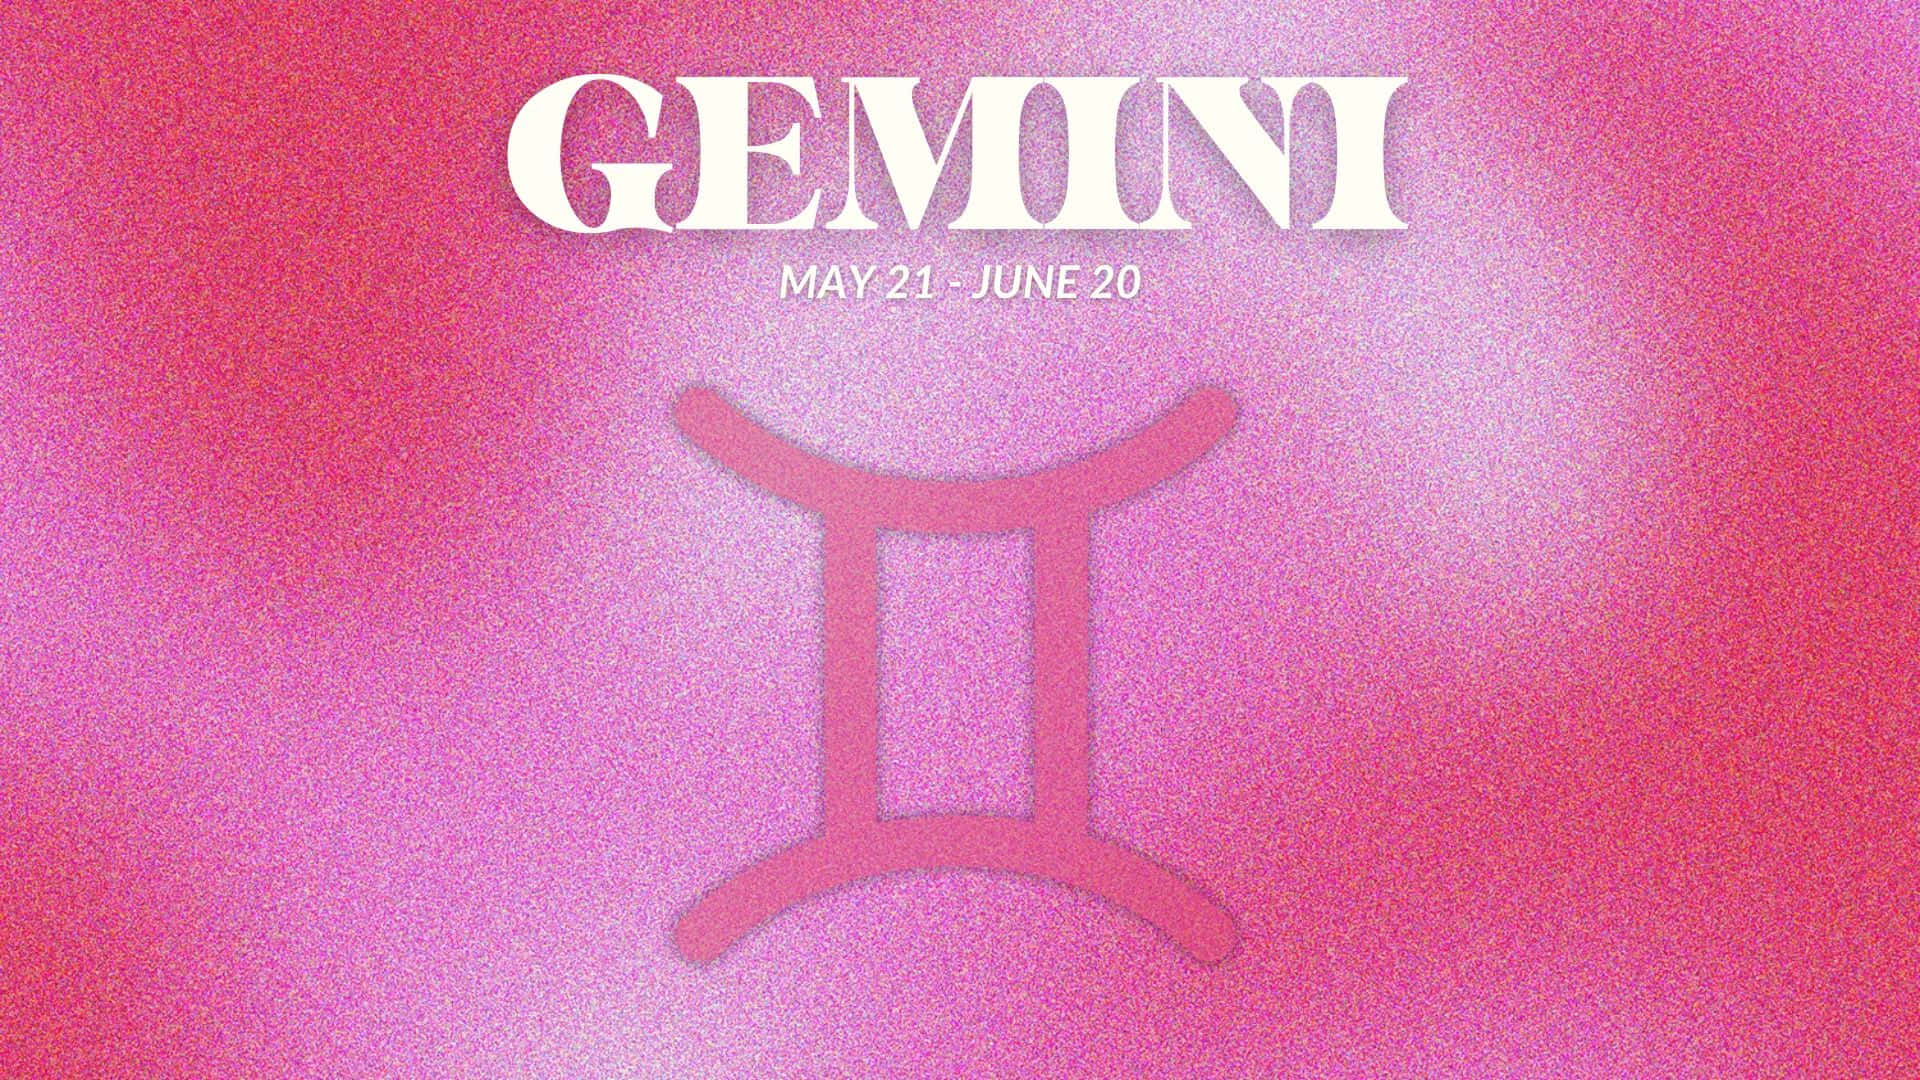 Pink Gemini Zodiac Sign Aesthetic Wallpaper